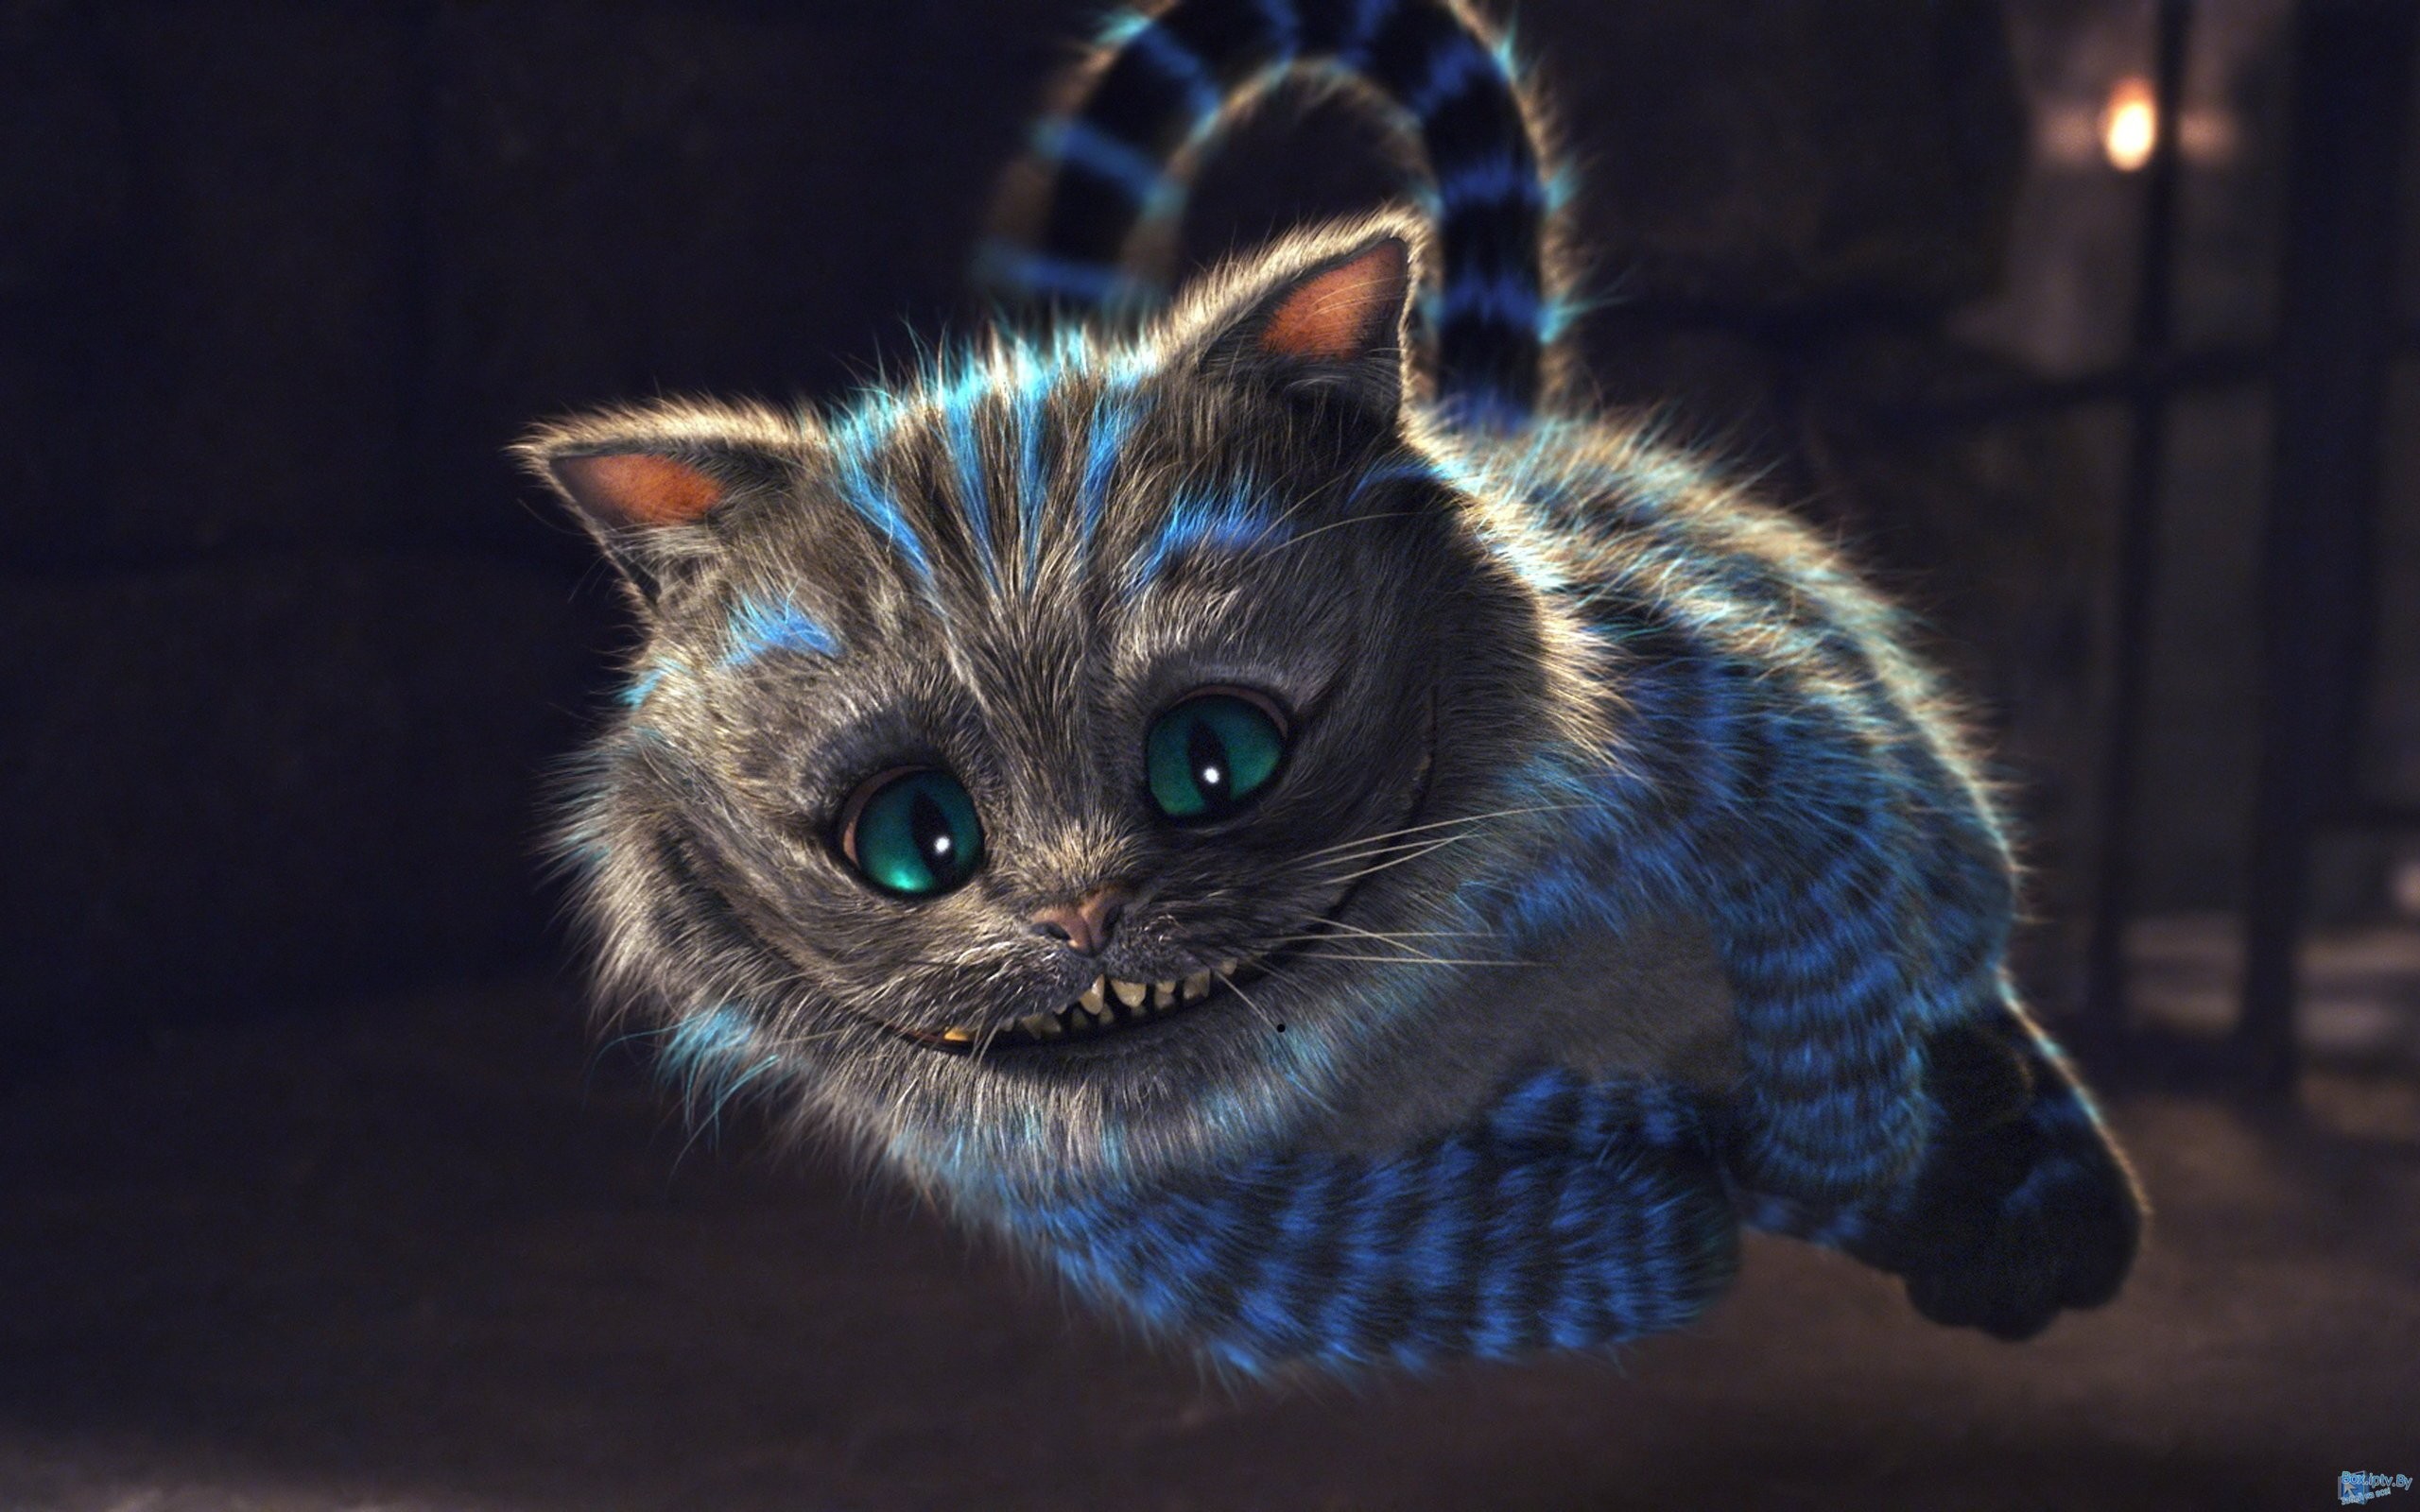 General 2560x1600 Cheshire Cat Alice in Wonderland animals fantasy art movies digital art watermarked